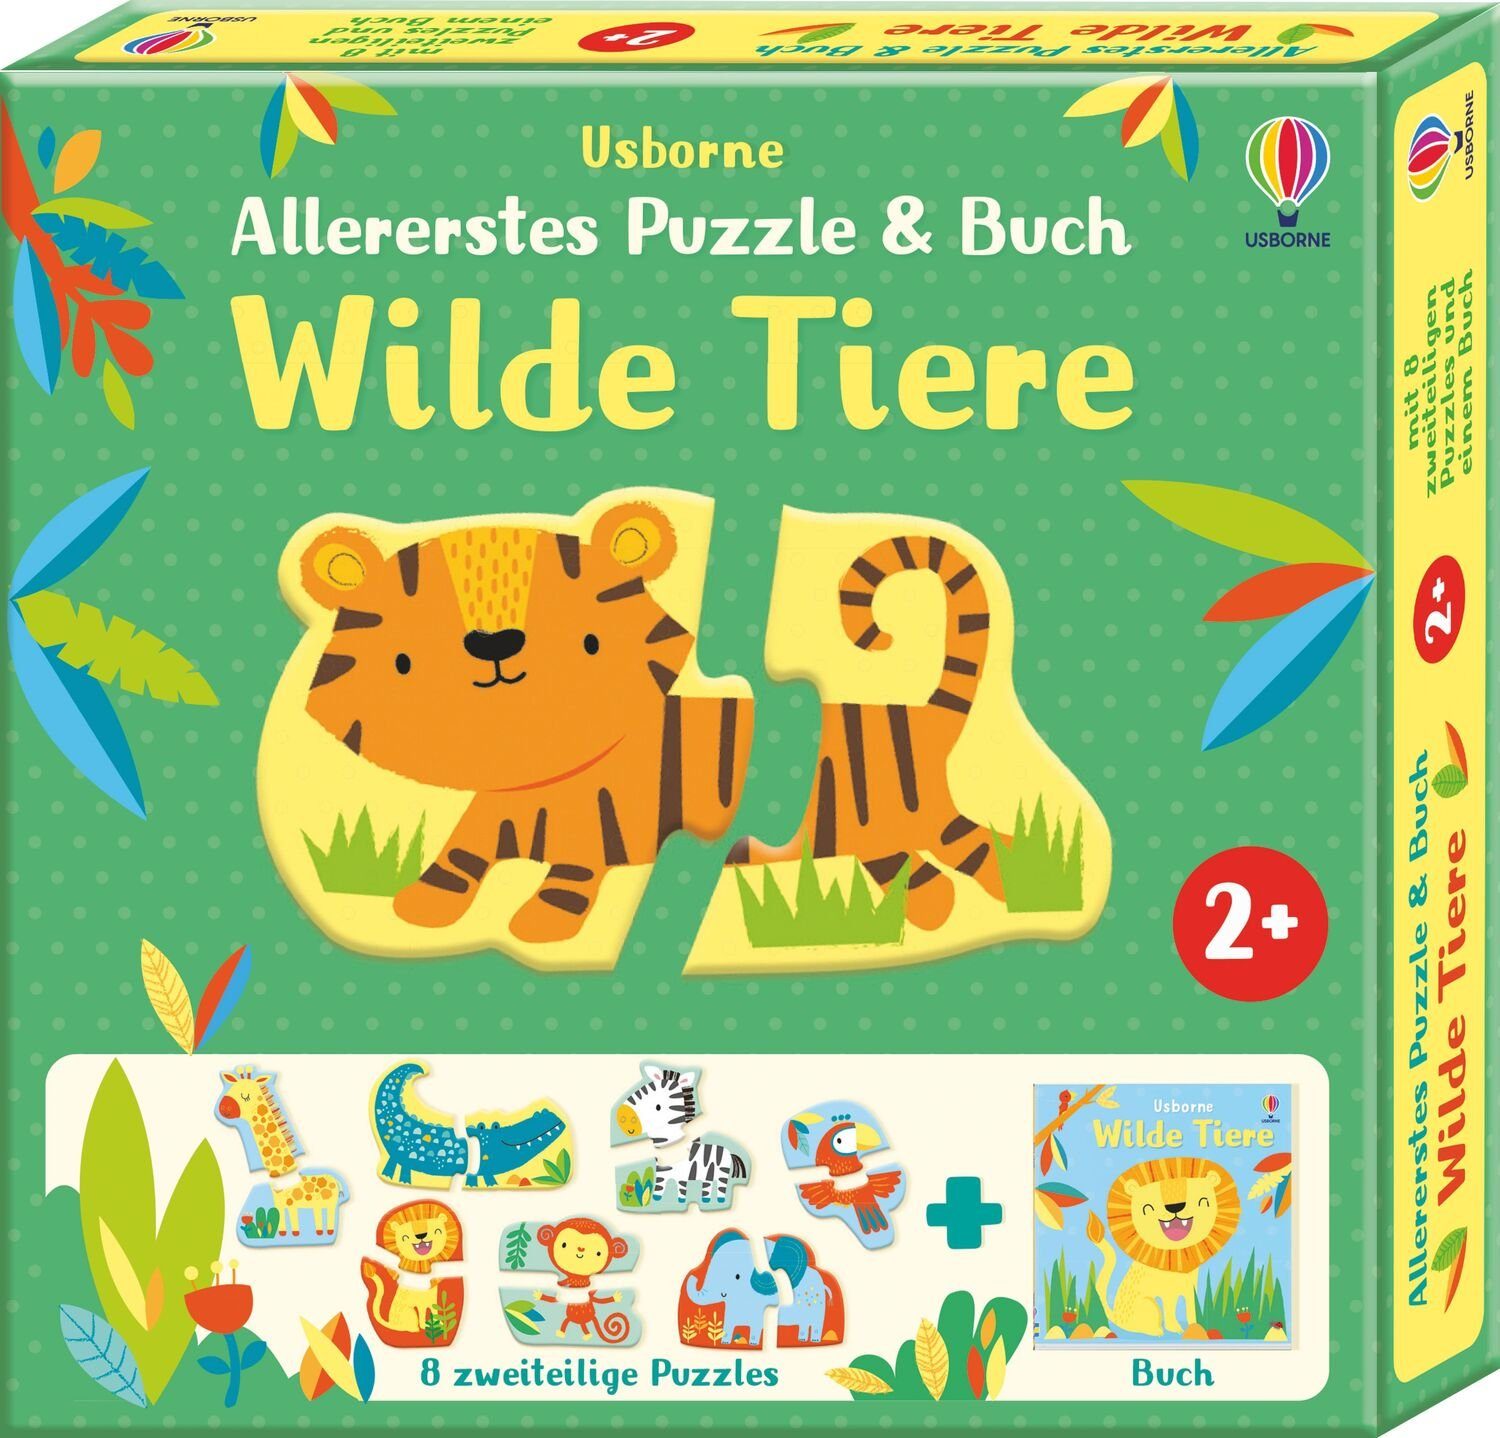 Verlag Puzzleteile Wilde Tiere, Allererstes & Puzzle Buch: Usborne Puzzle